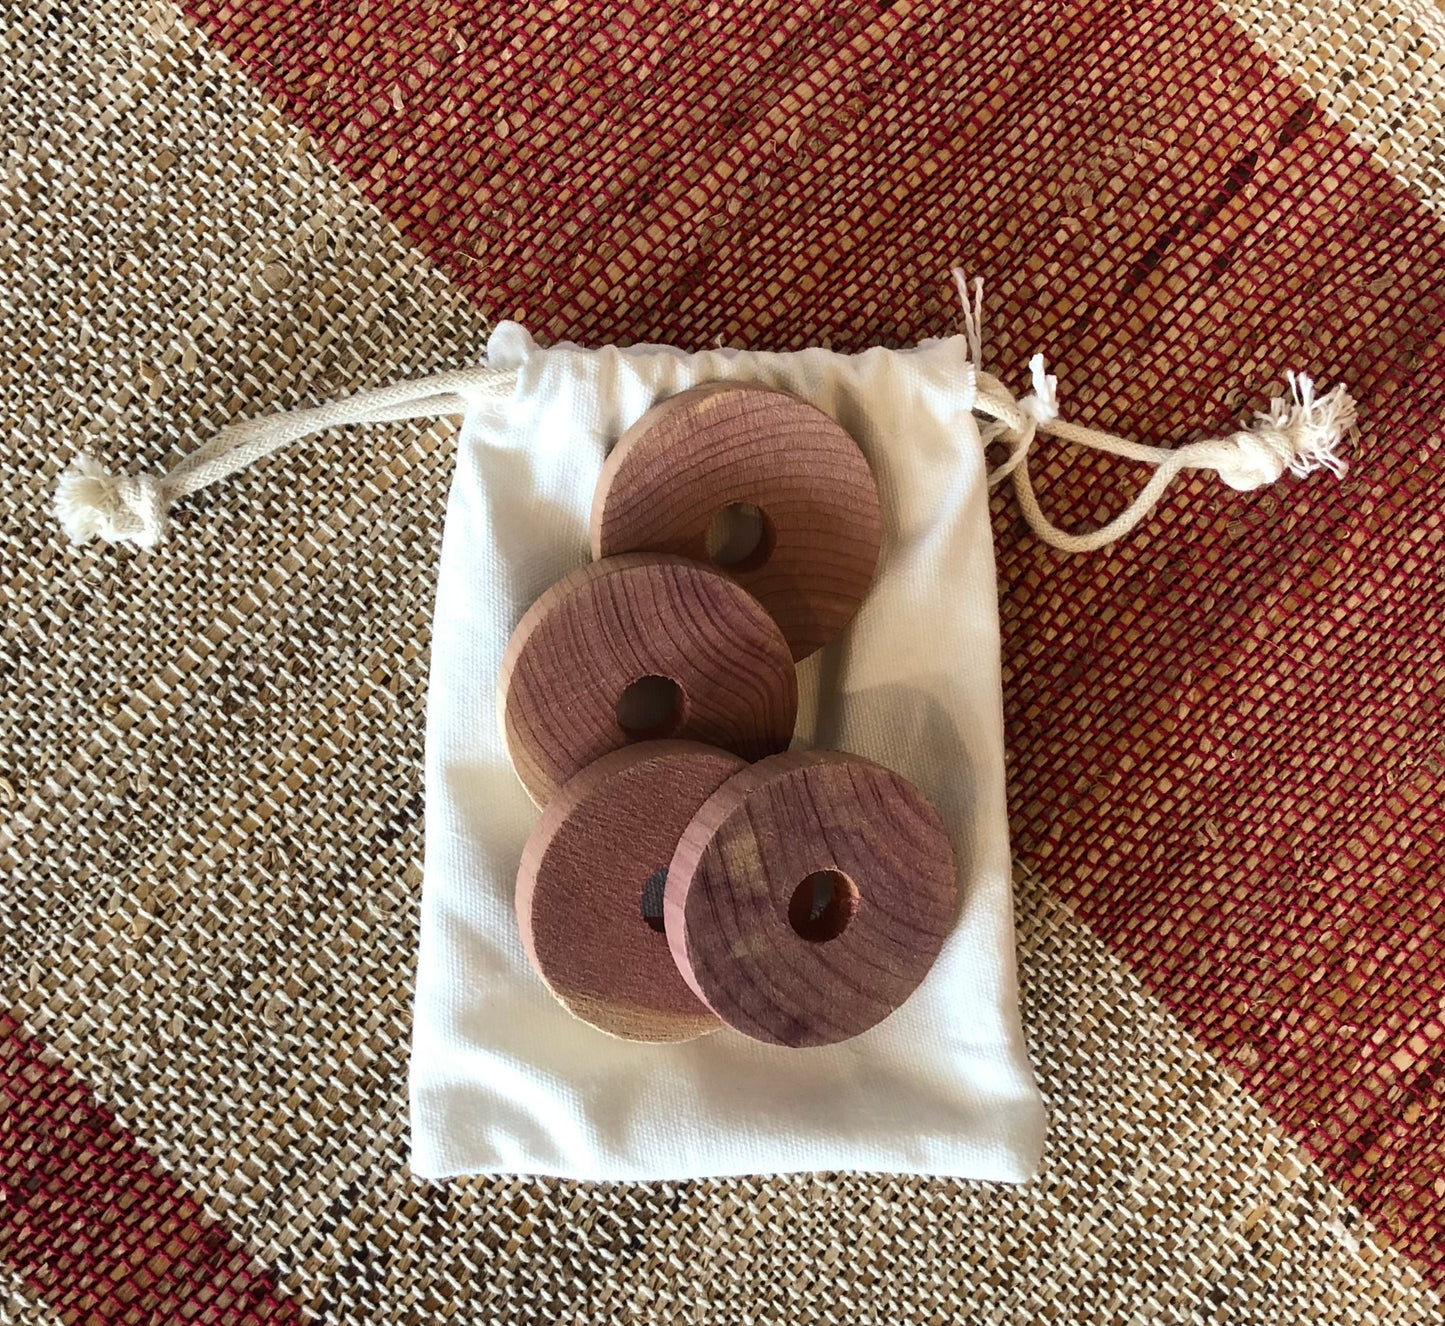 4 cedar discs and cotton drawstring bag